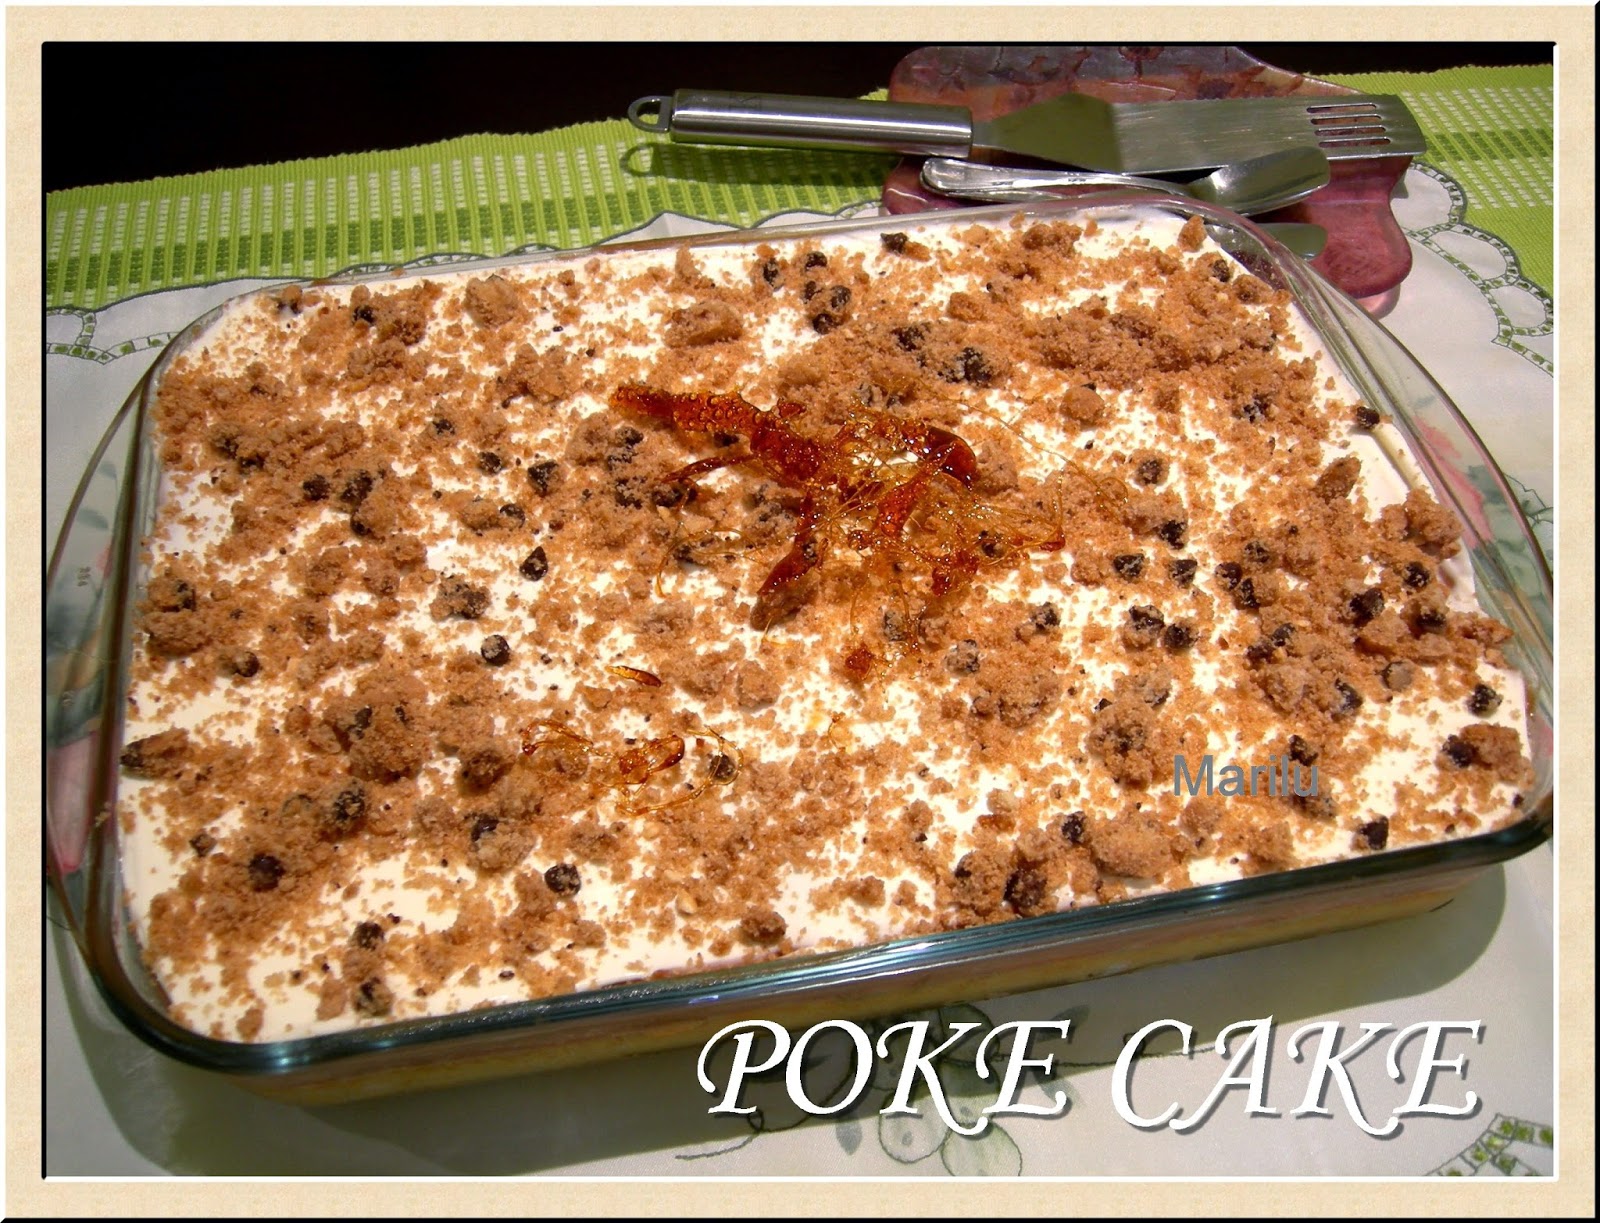 Poke Cake
